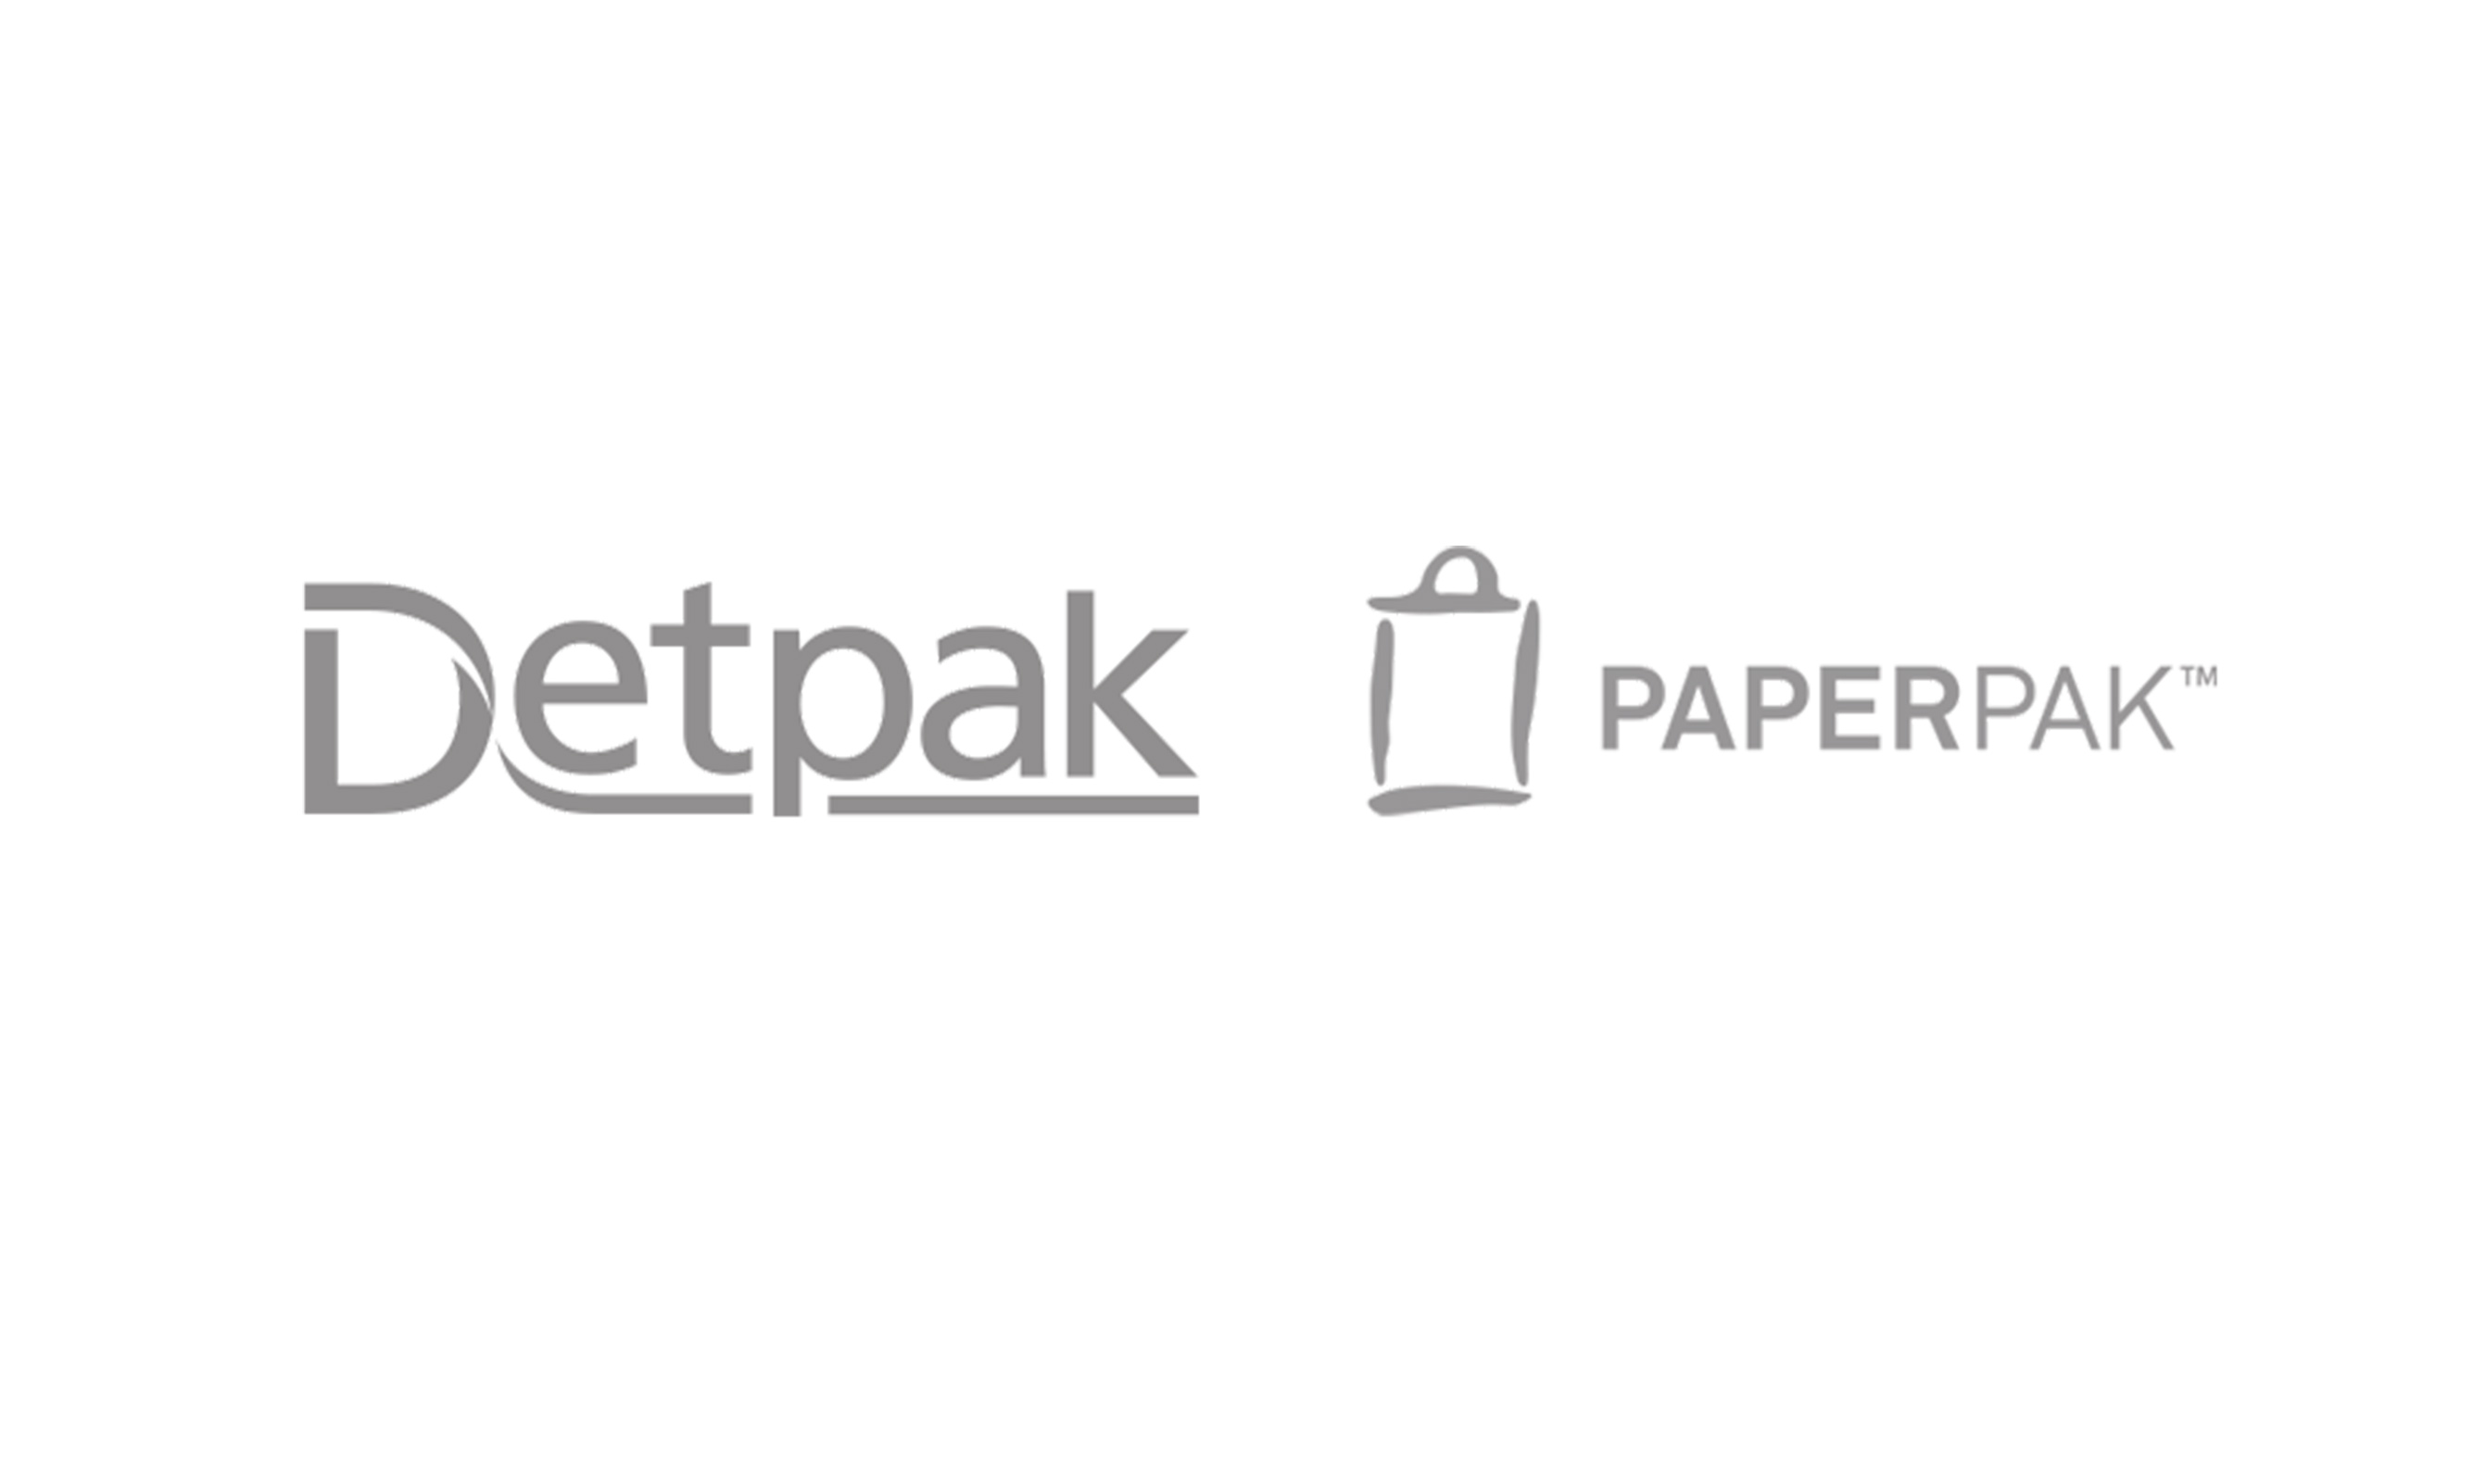 Image of Detpak and PaperPak logos